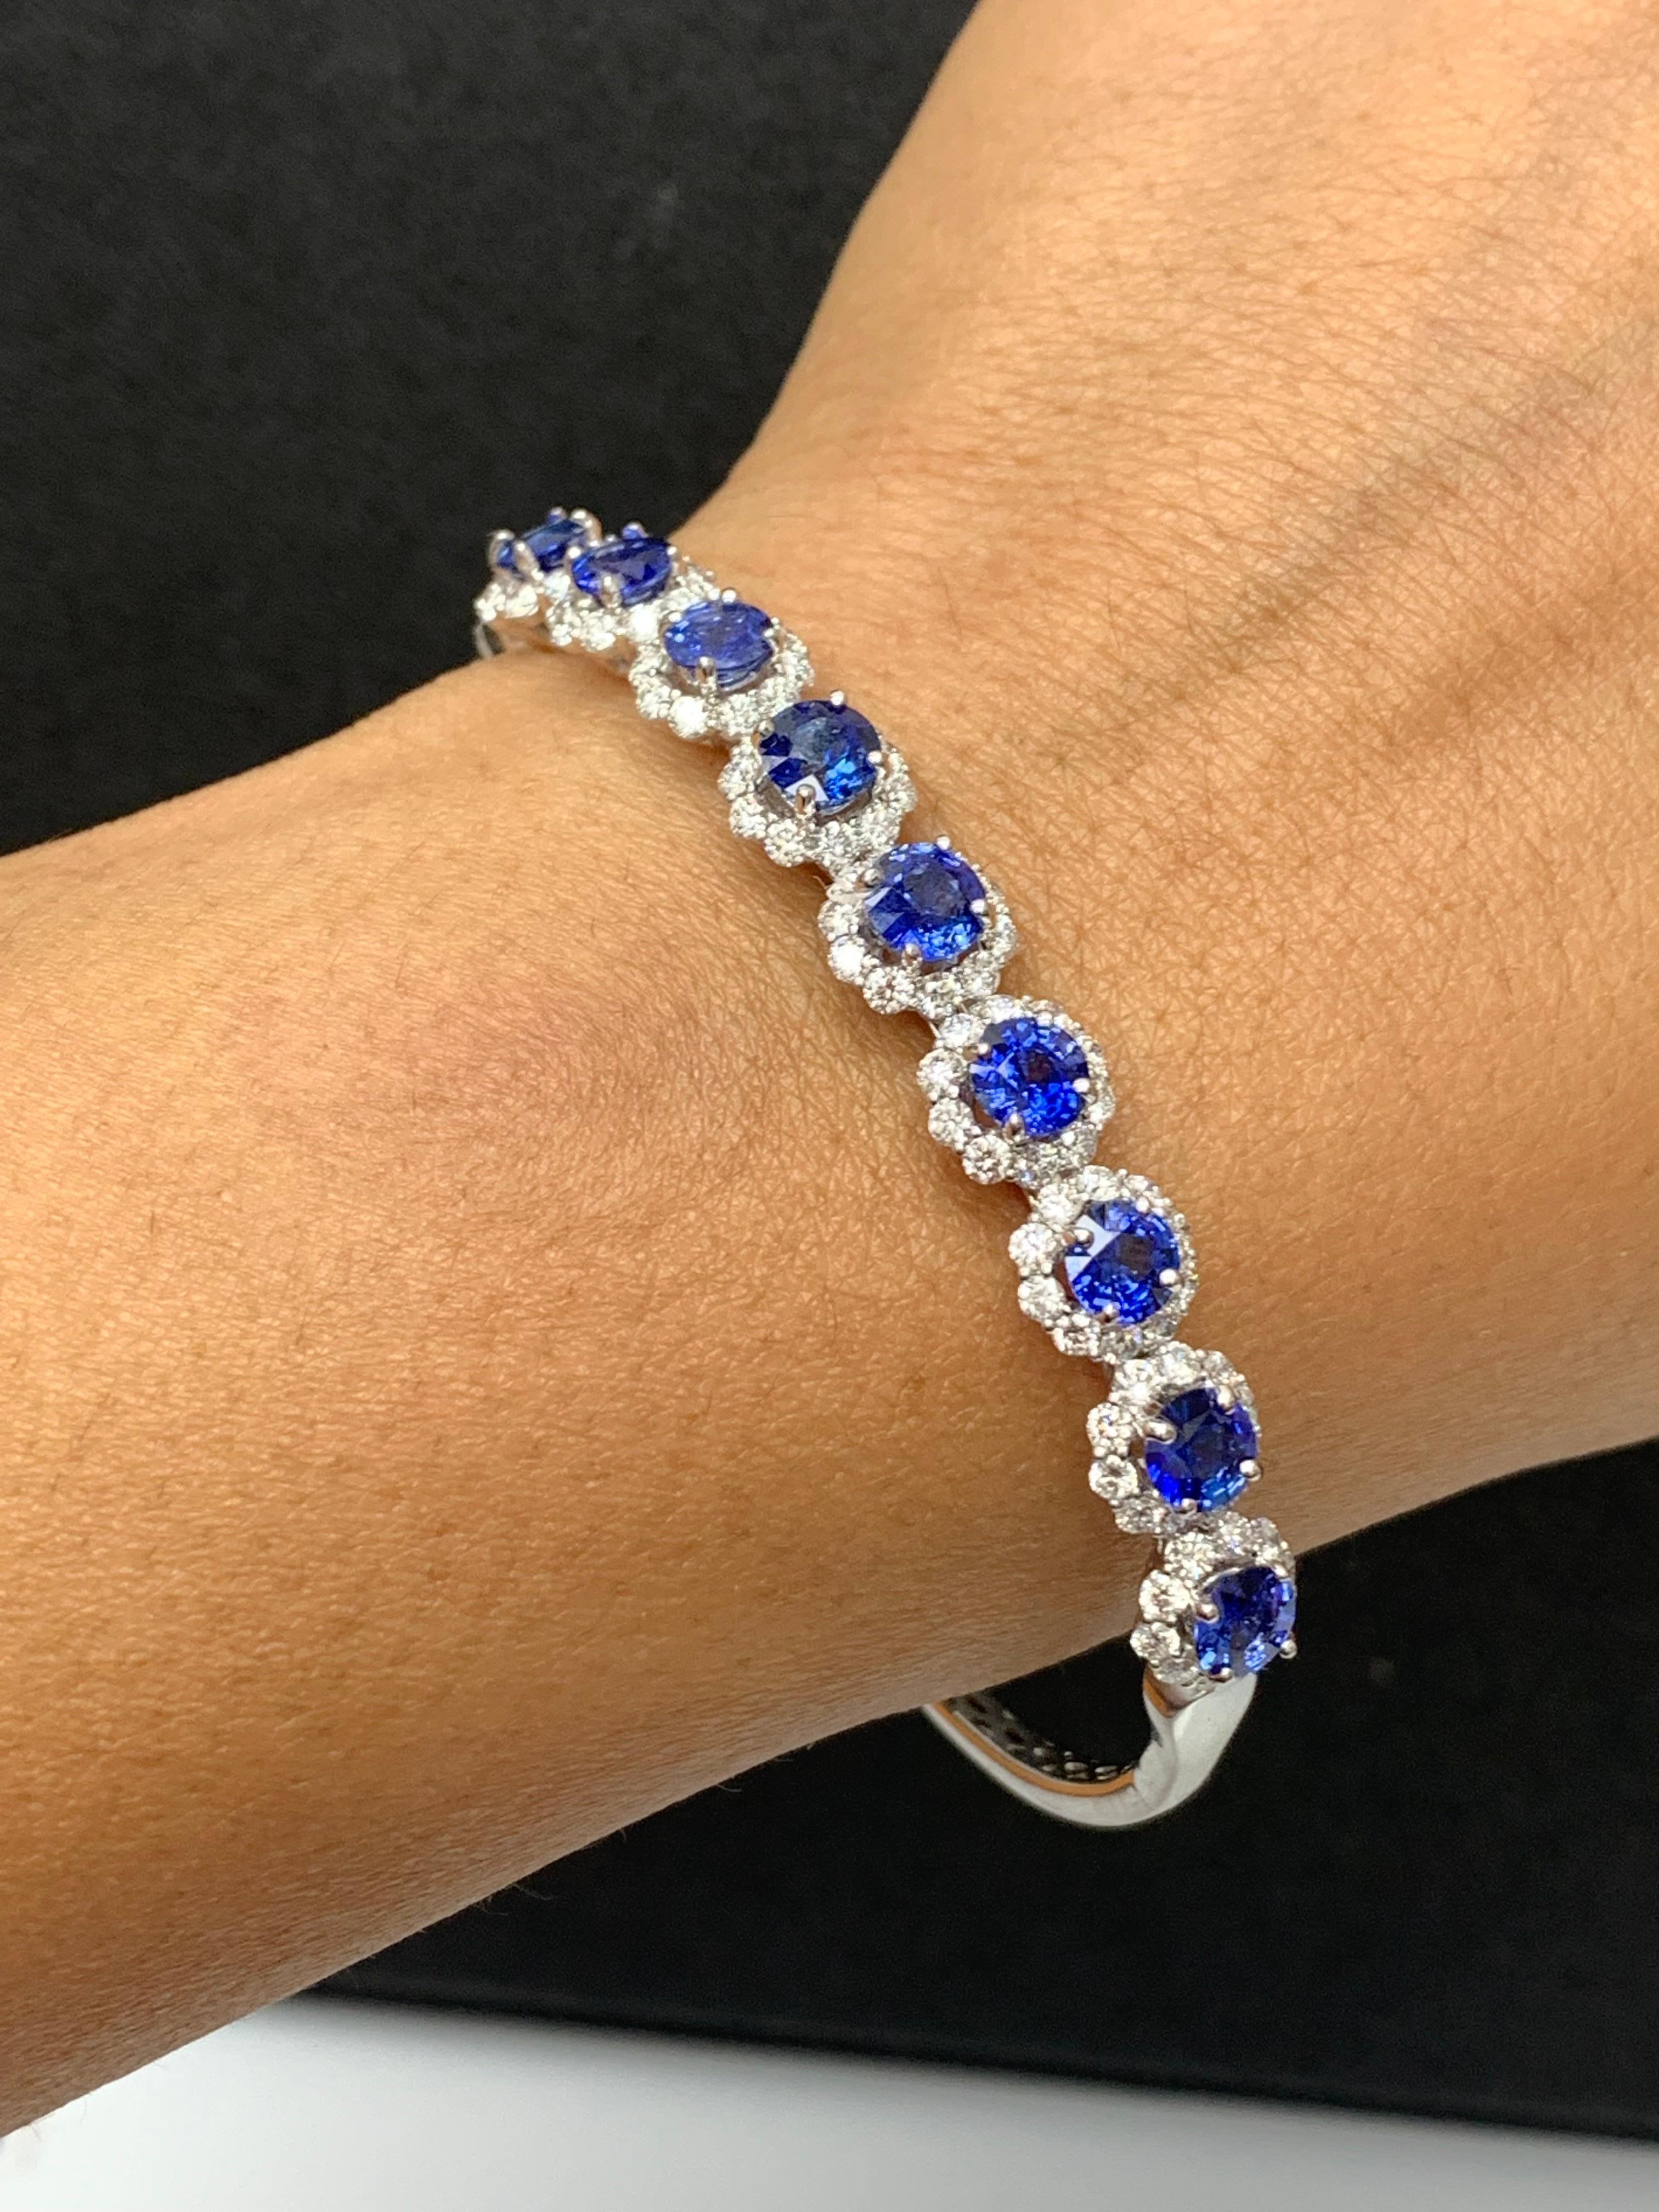 Women's 4.88 Carat Brilliant Cut Blue Sapphire Diamond Bangle Bracelet in 18k White Gold For Sale